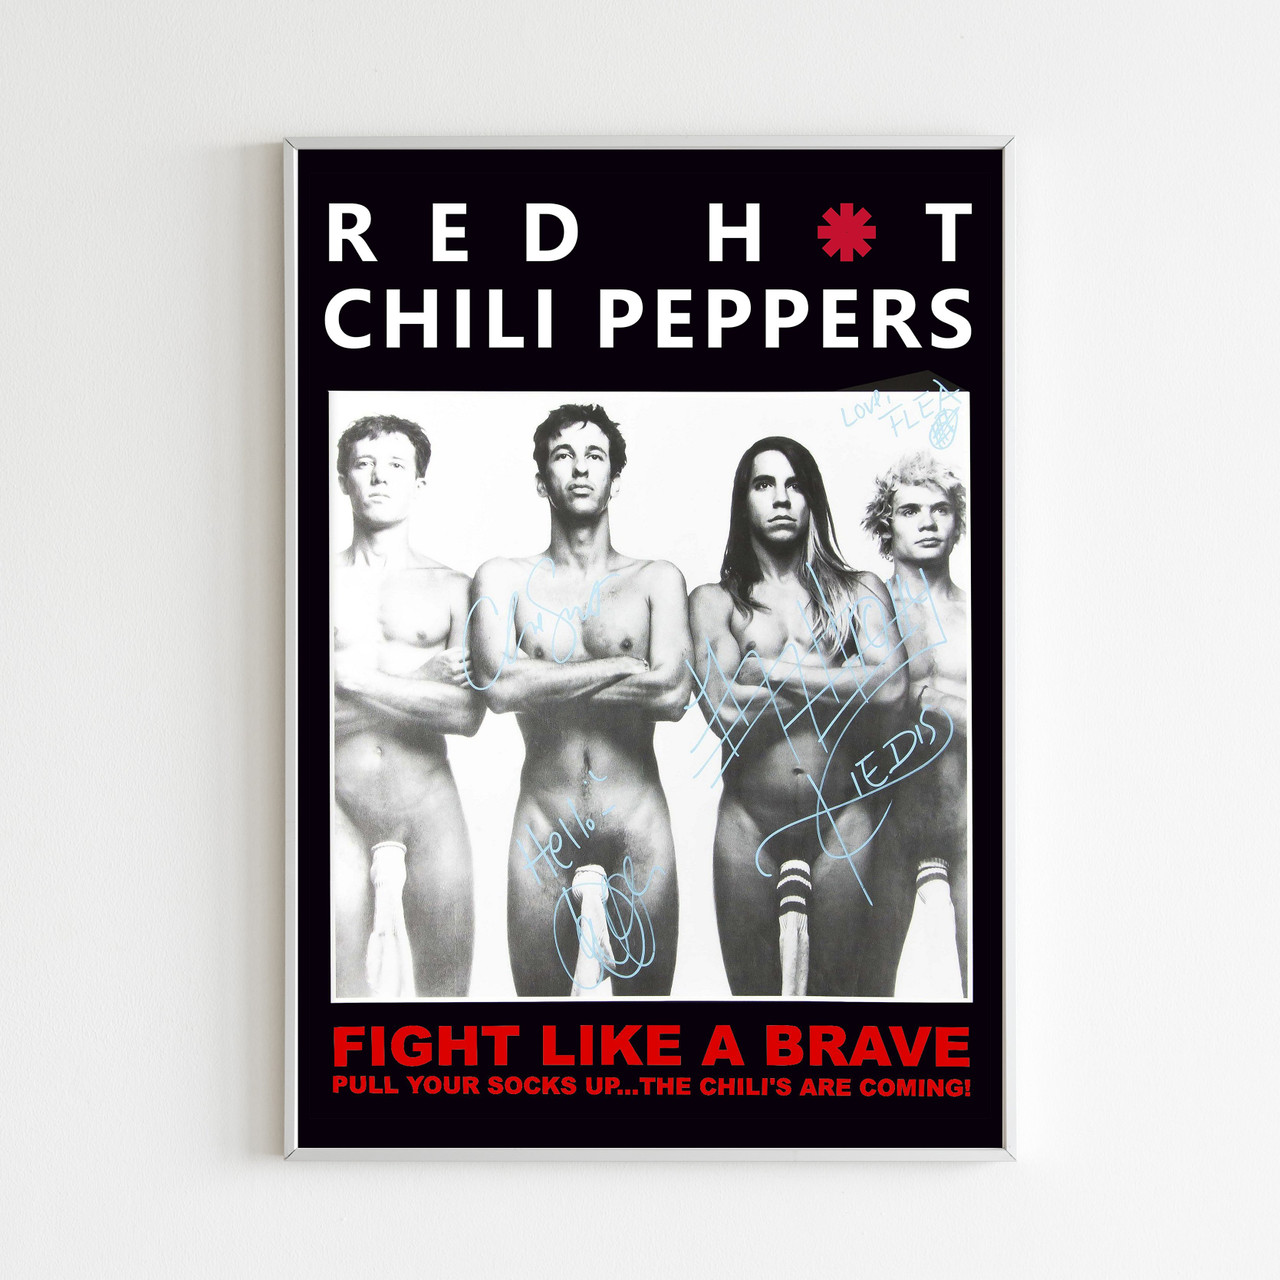 Red hot chili peppers socks californication wallpaper poster